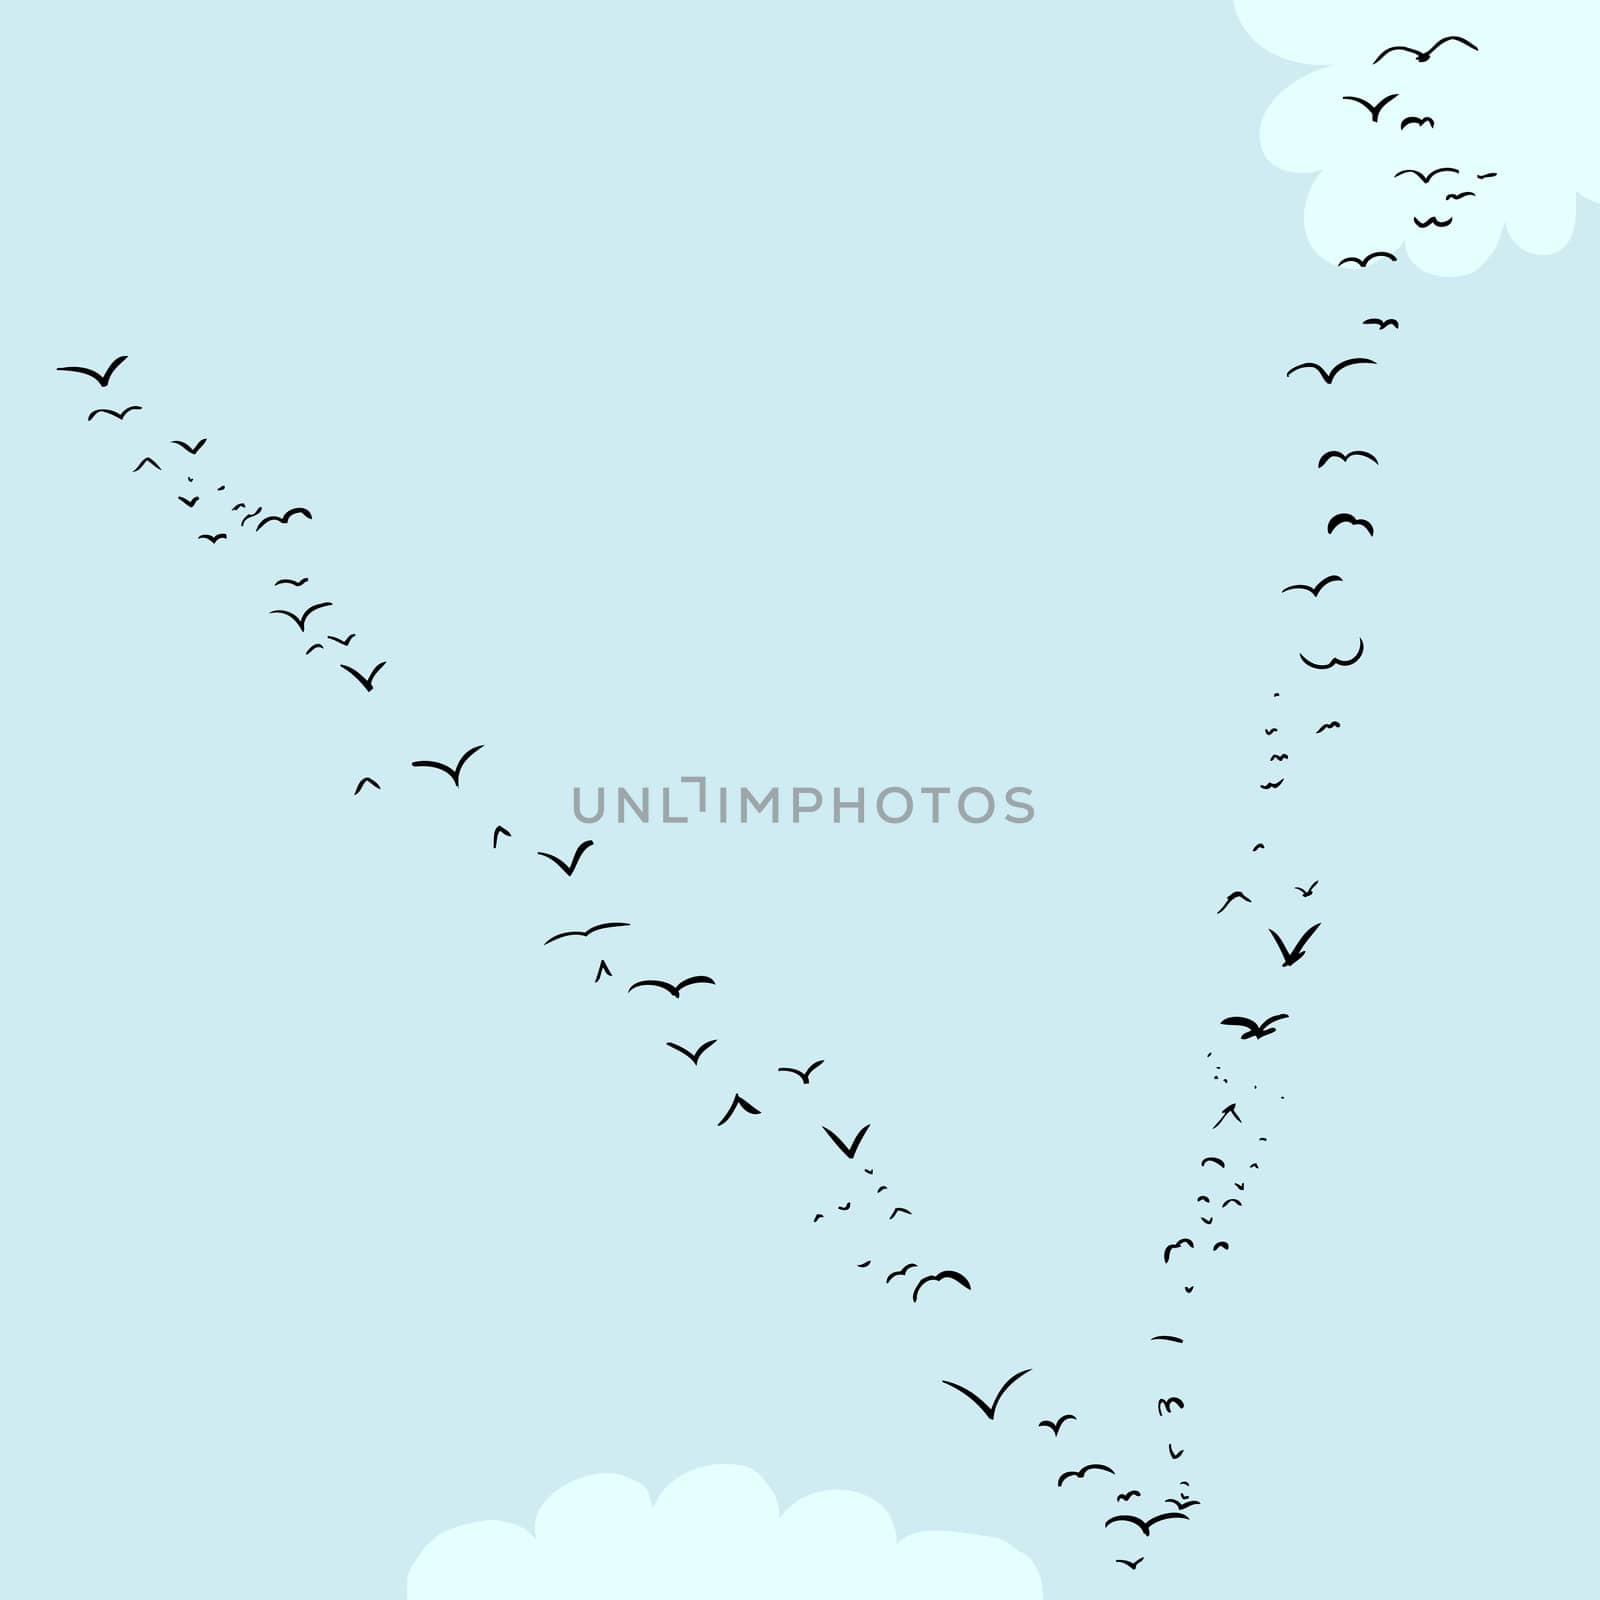 Illustration of a flock of birds in the shape of the letter v